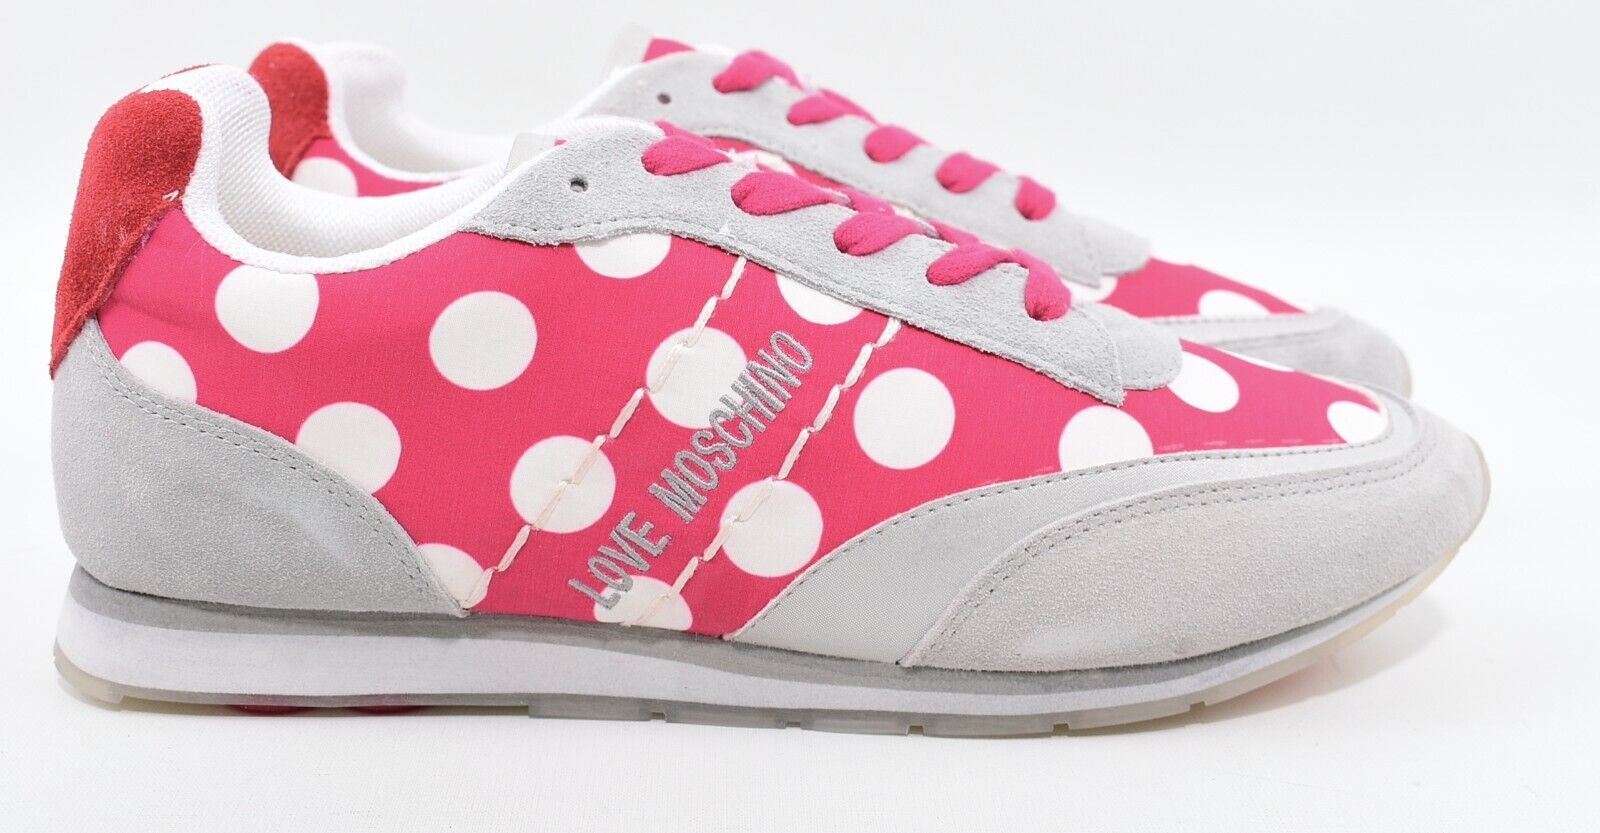 MOSCHINO Womens Polka Dot Trainers Sneakers, Grey/Pink, size UK 6 /EU 39